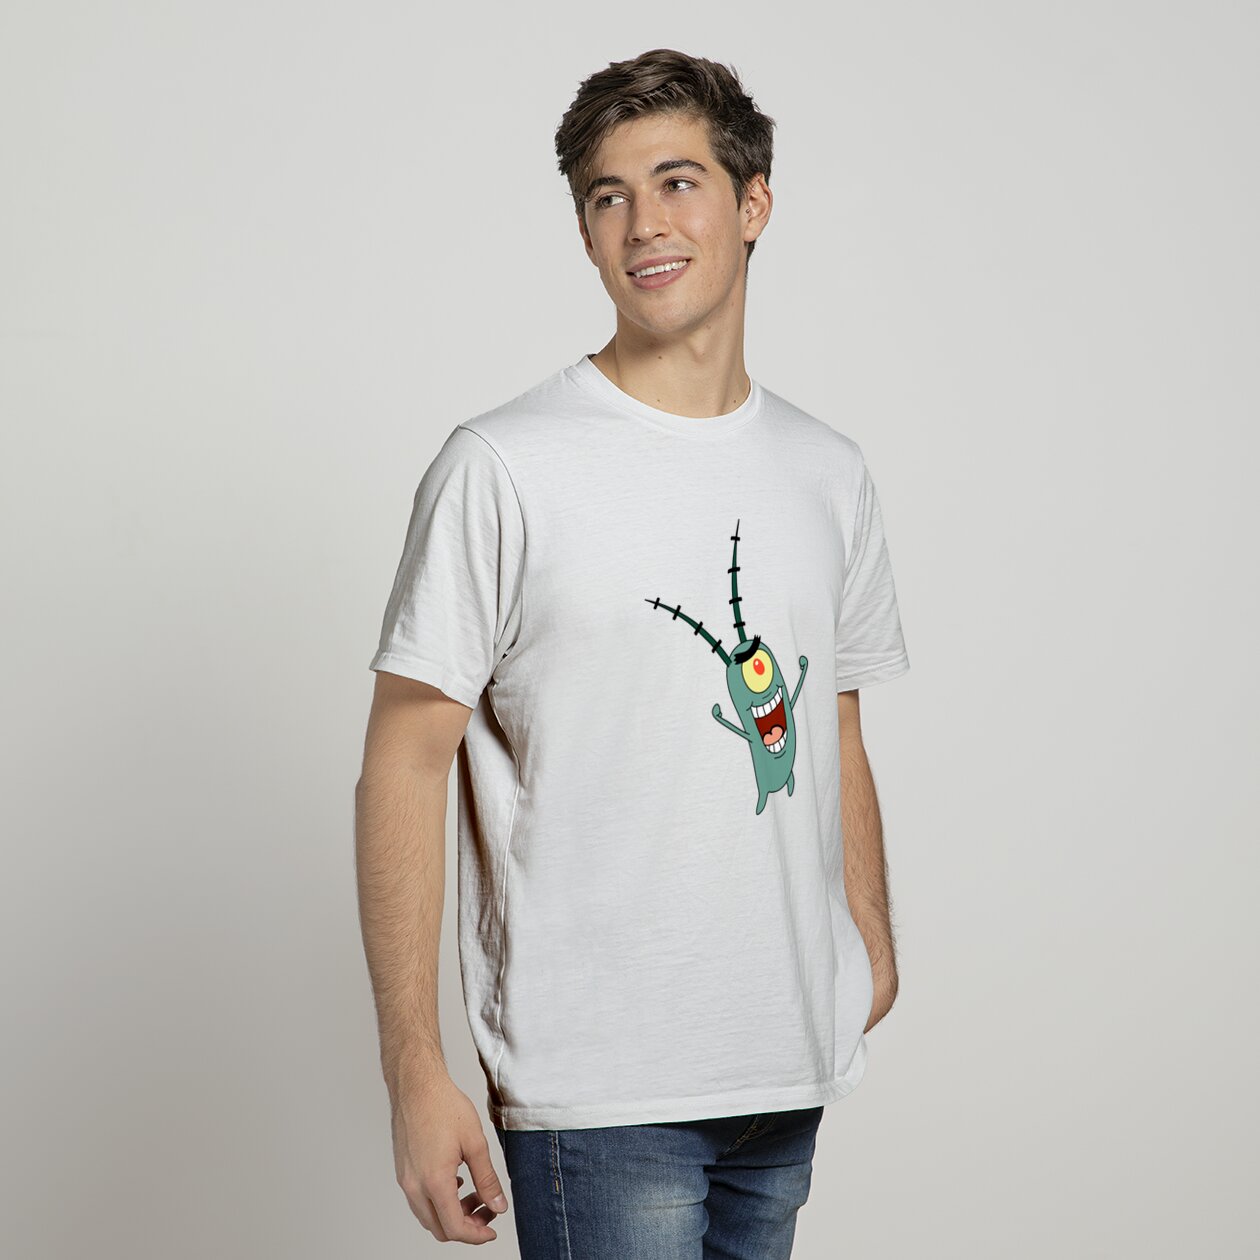 Plankton T Shirt